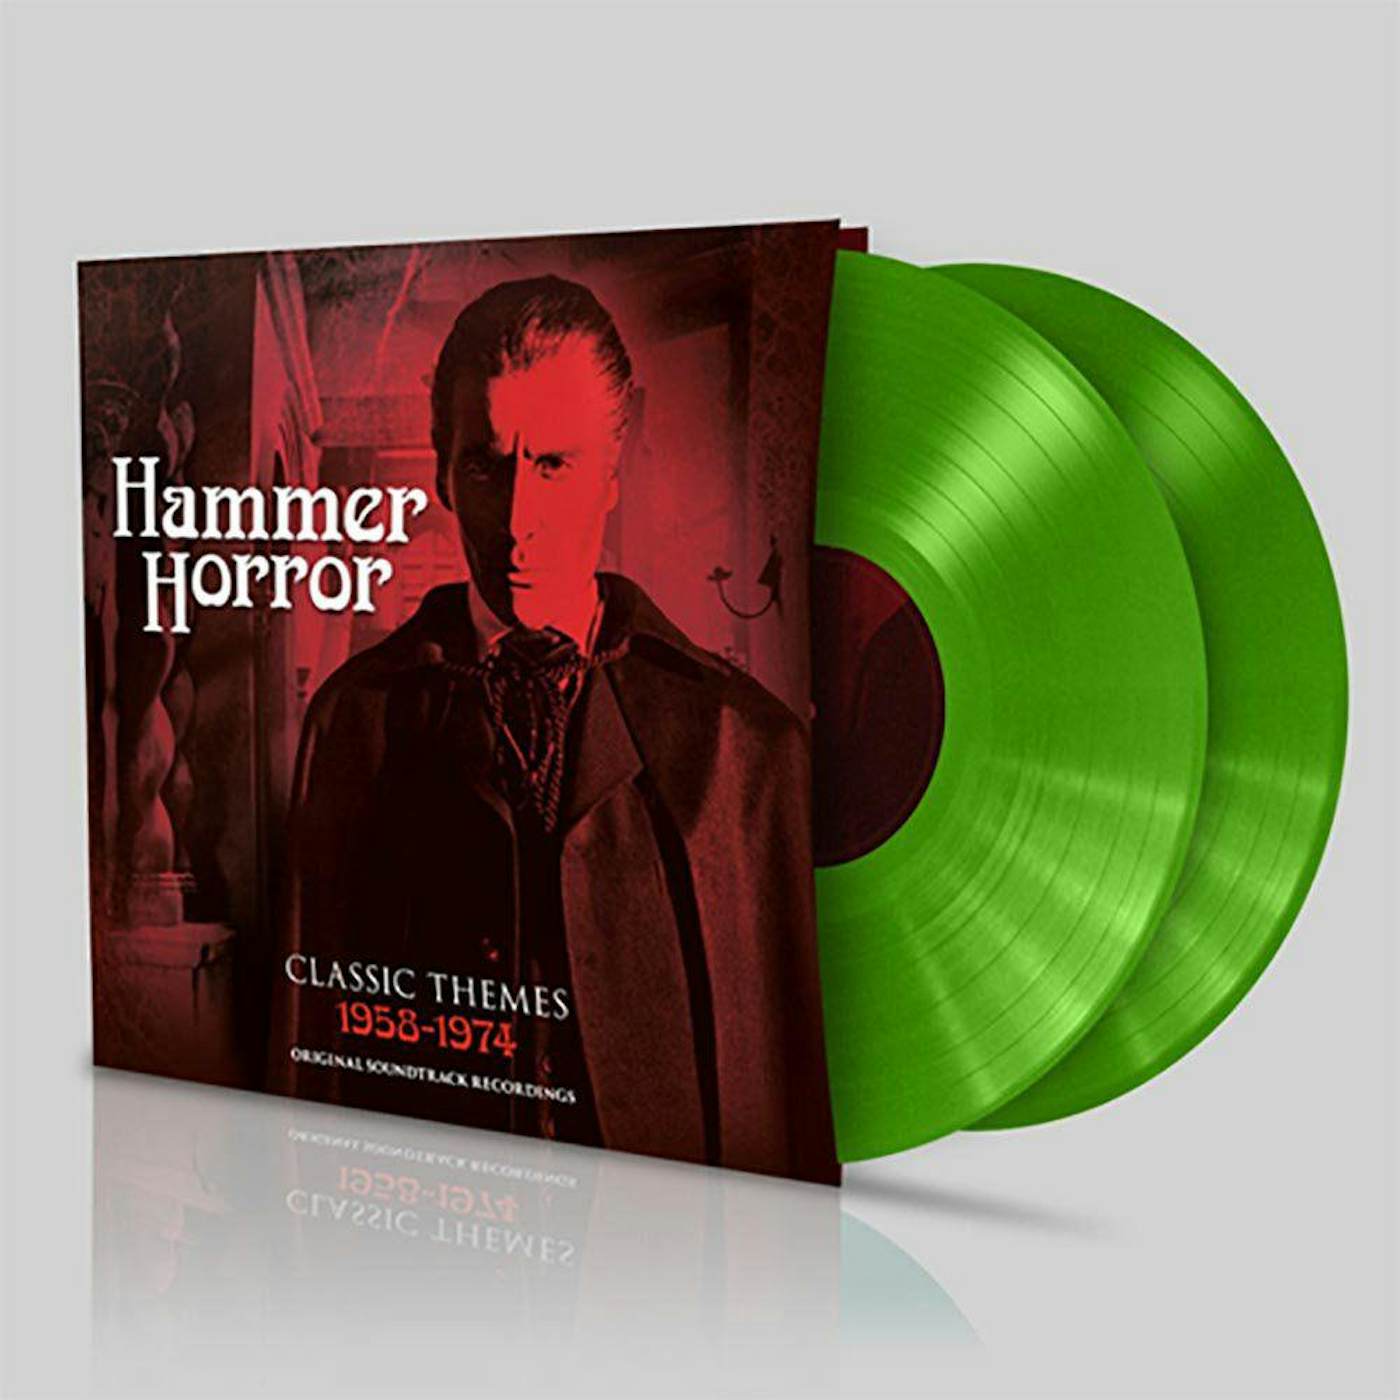 Hammer Horror Classic Themes / O.S.T. HAMMER HORROR CLASSIC THEMES / Original Soundtrack Vinyl Record